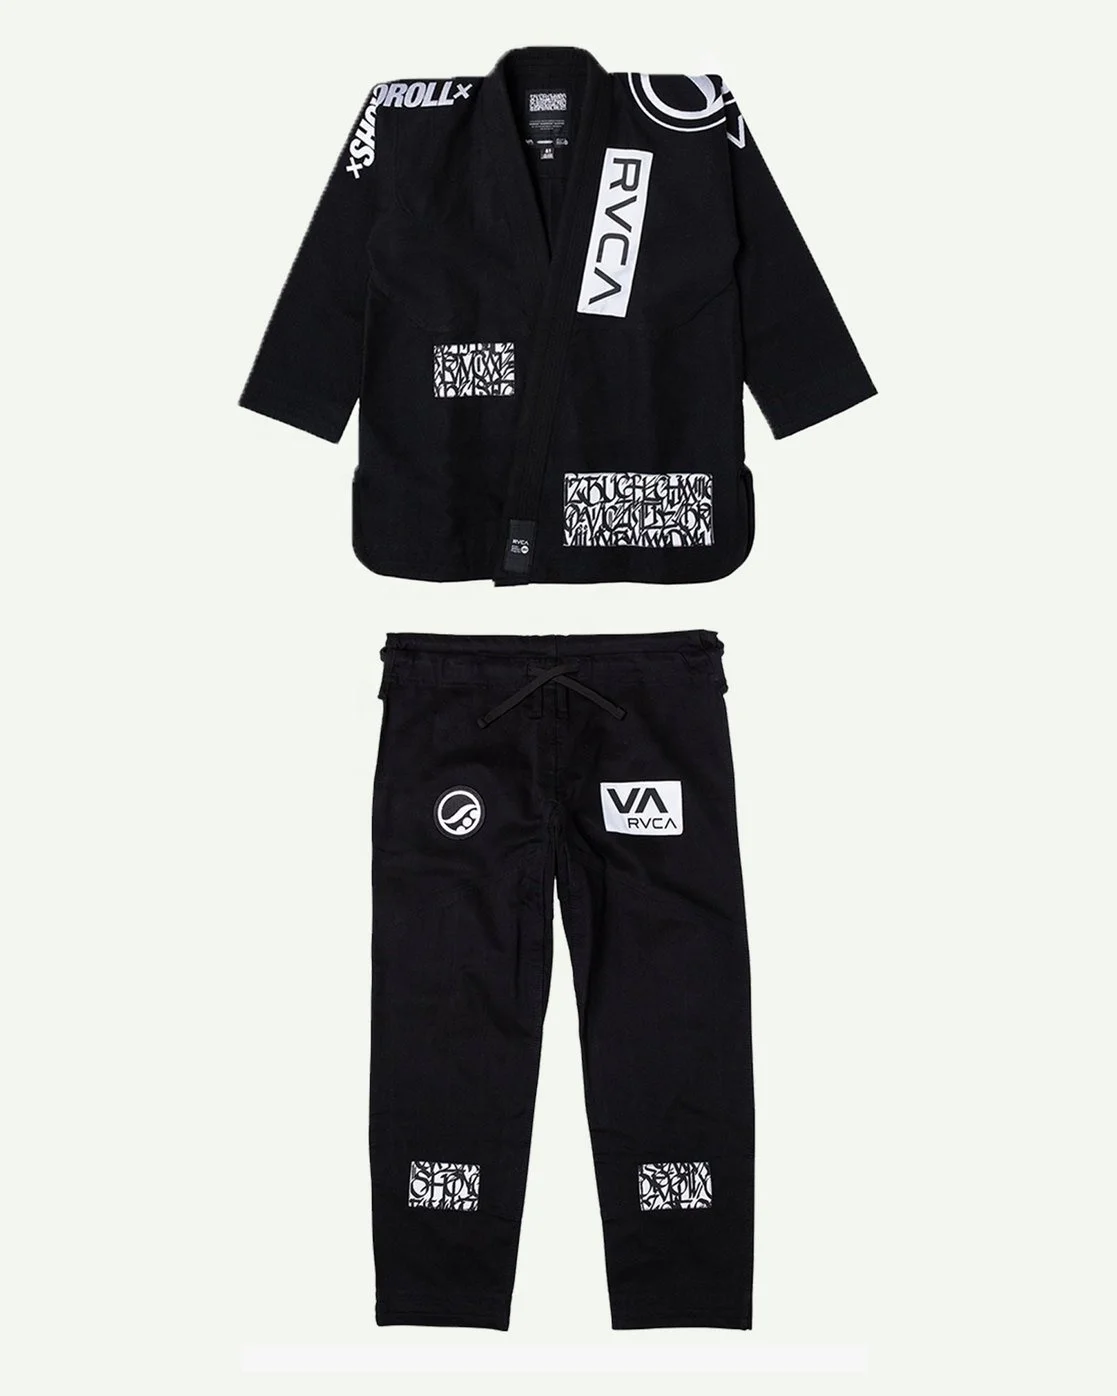 BJJ Gi/Uniform Light Weight Custom Made BJJ Martial Arts Suit Details about   RVCA BJJ Gi 